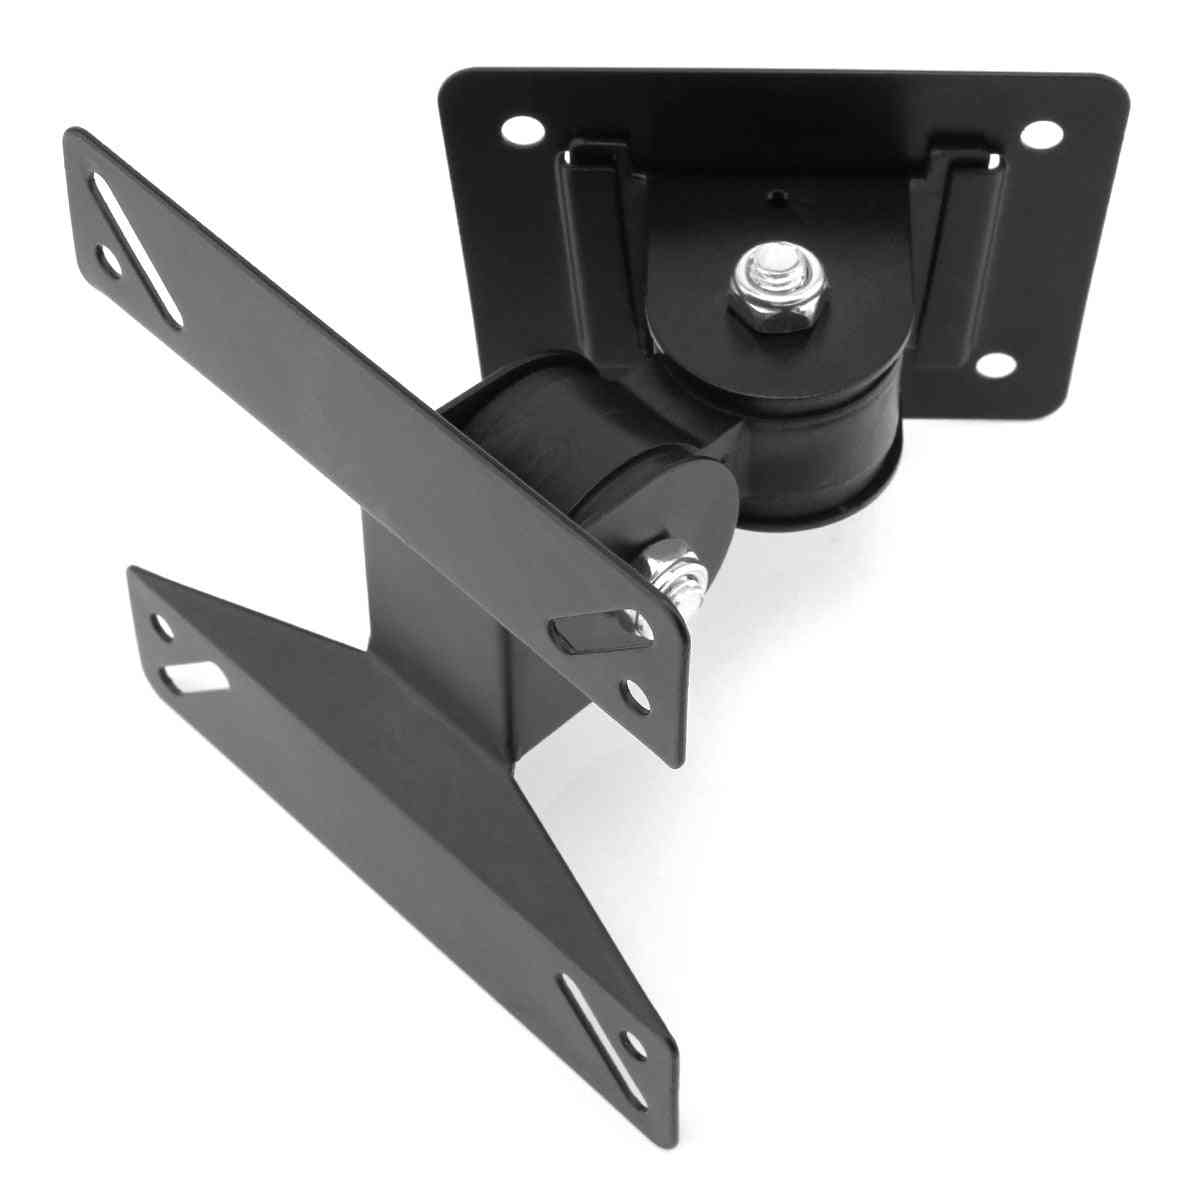 Adjustable And Rotatable-wall Mount Tv Holder Bracket